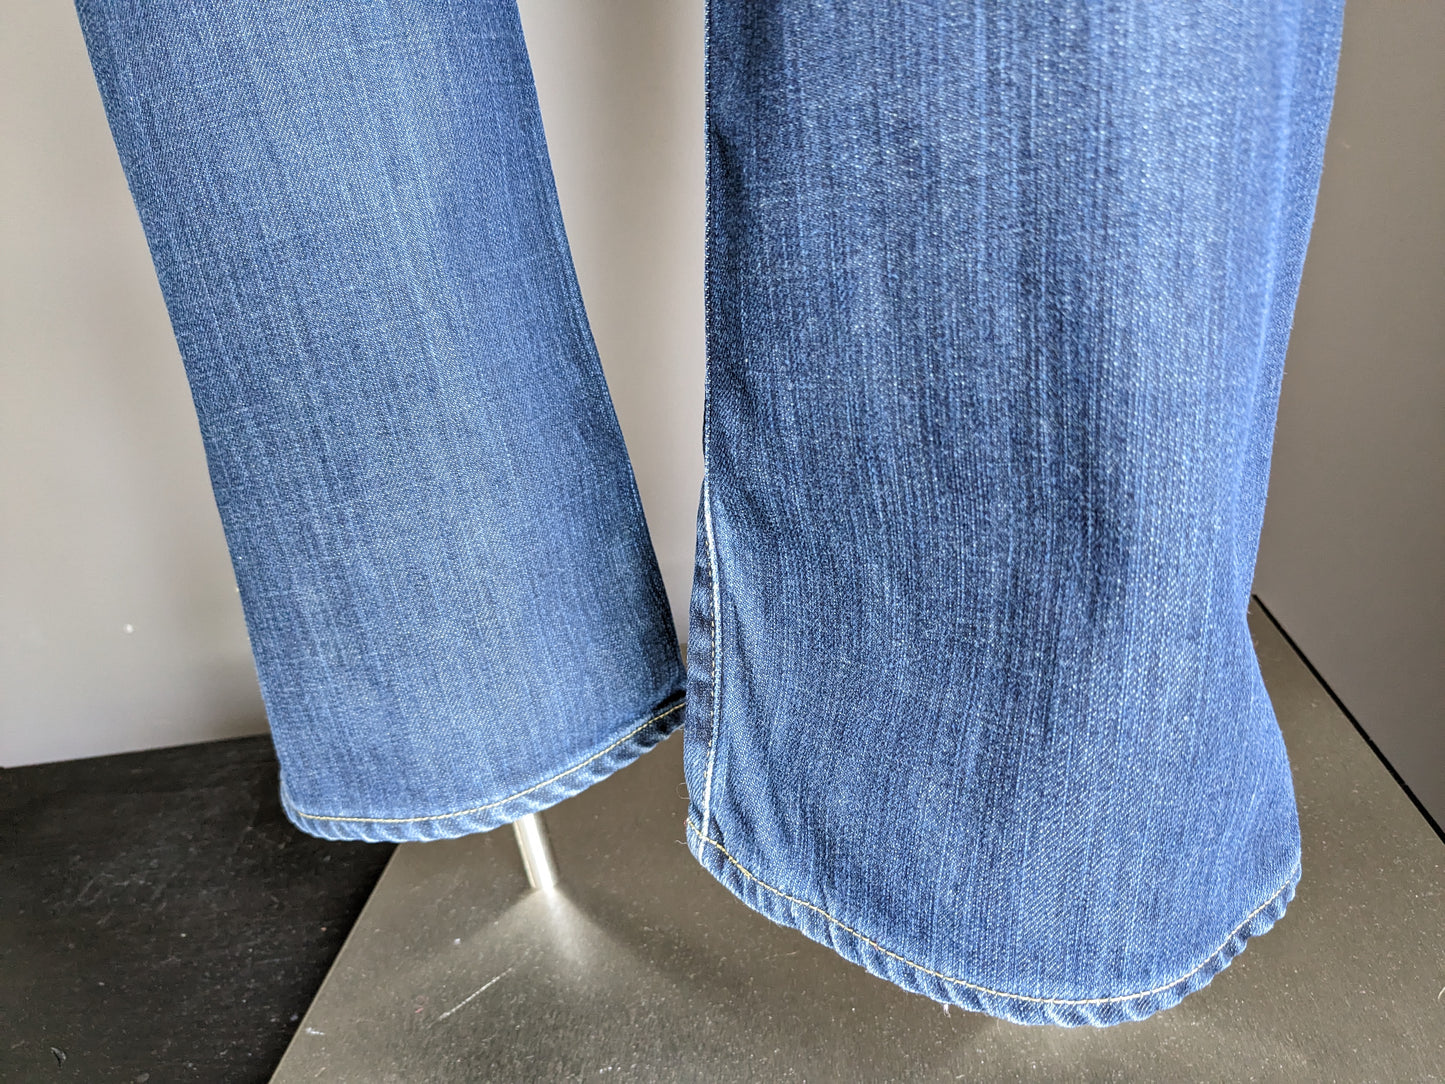 G-Star Jeans crudos. Color azul oscuro. Tamaño W31 - L32.